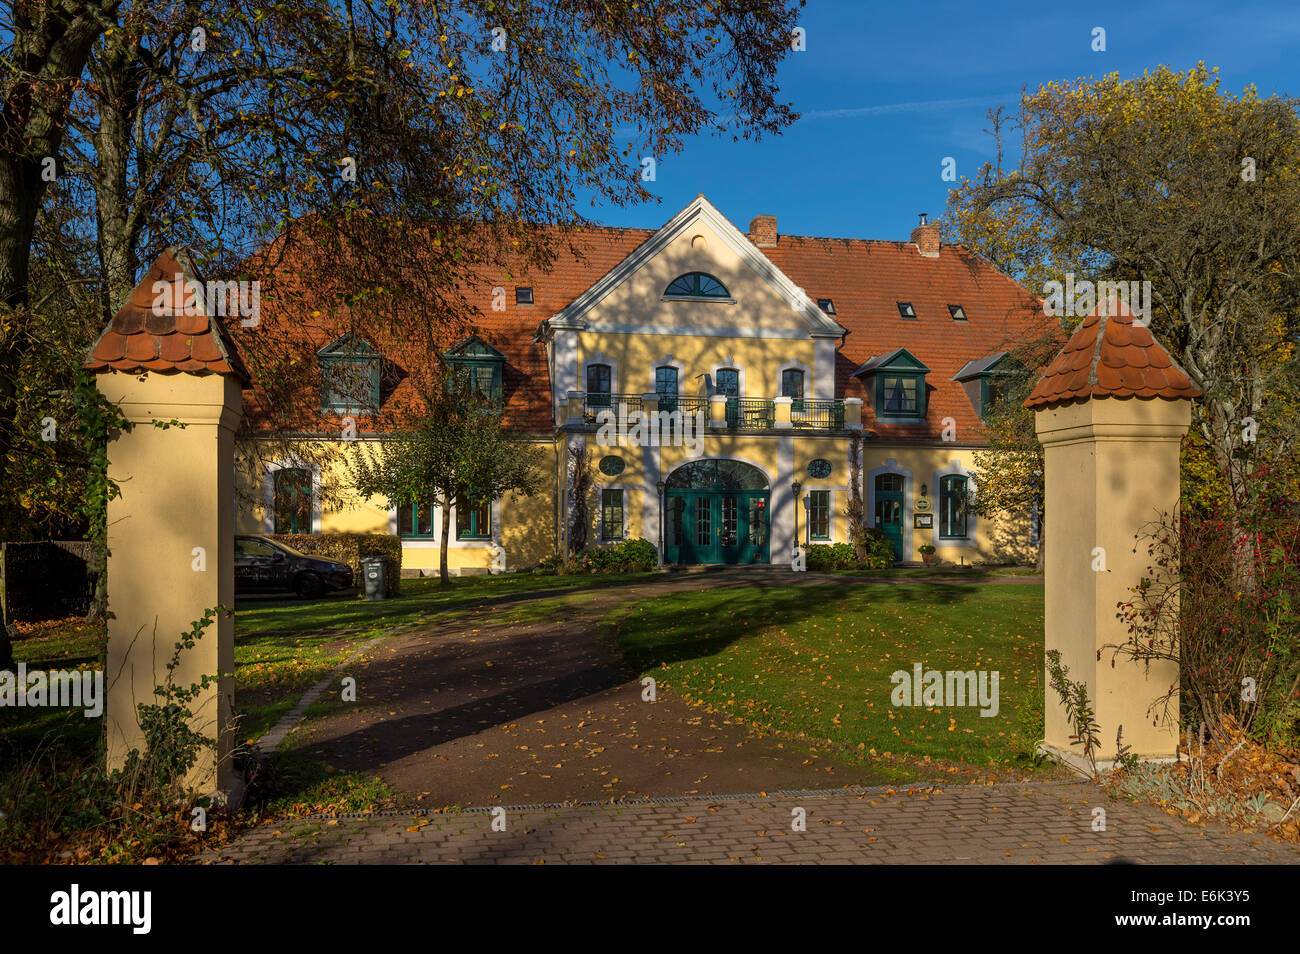 Gutshaus Solzow Manor, Vipperow, Mecklenburg-Western Pomerania, Germany Stock Photo